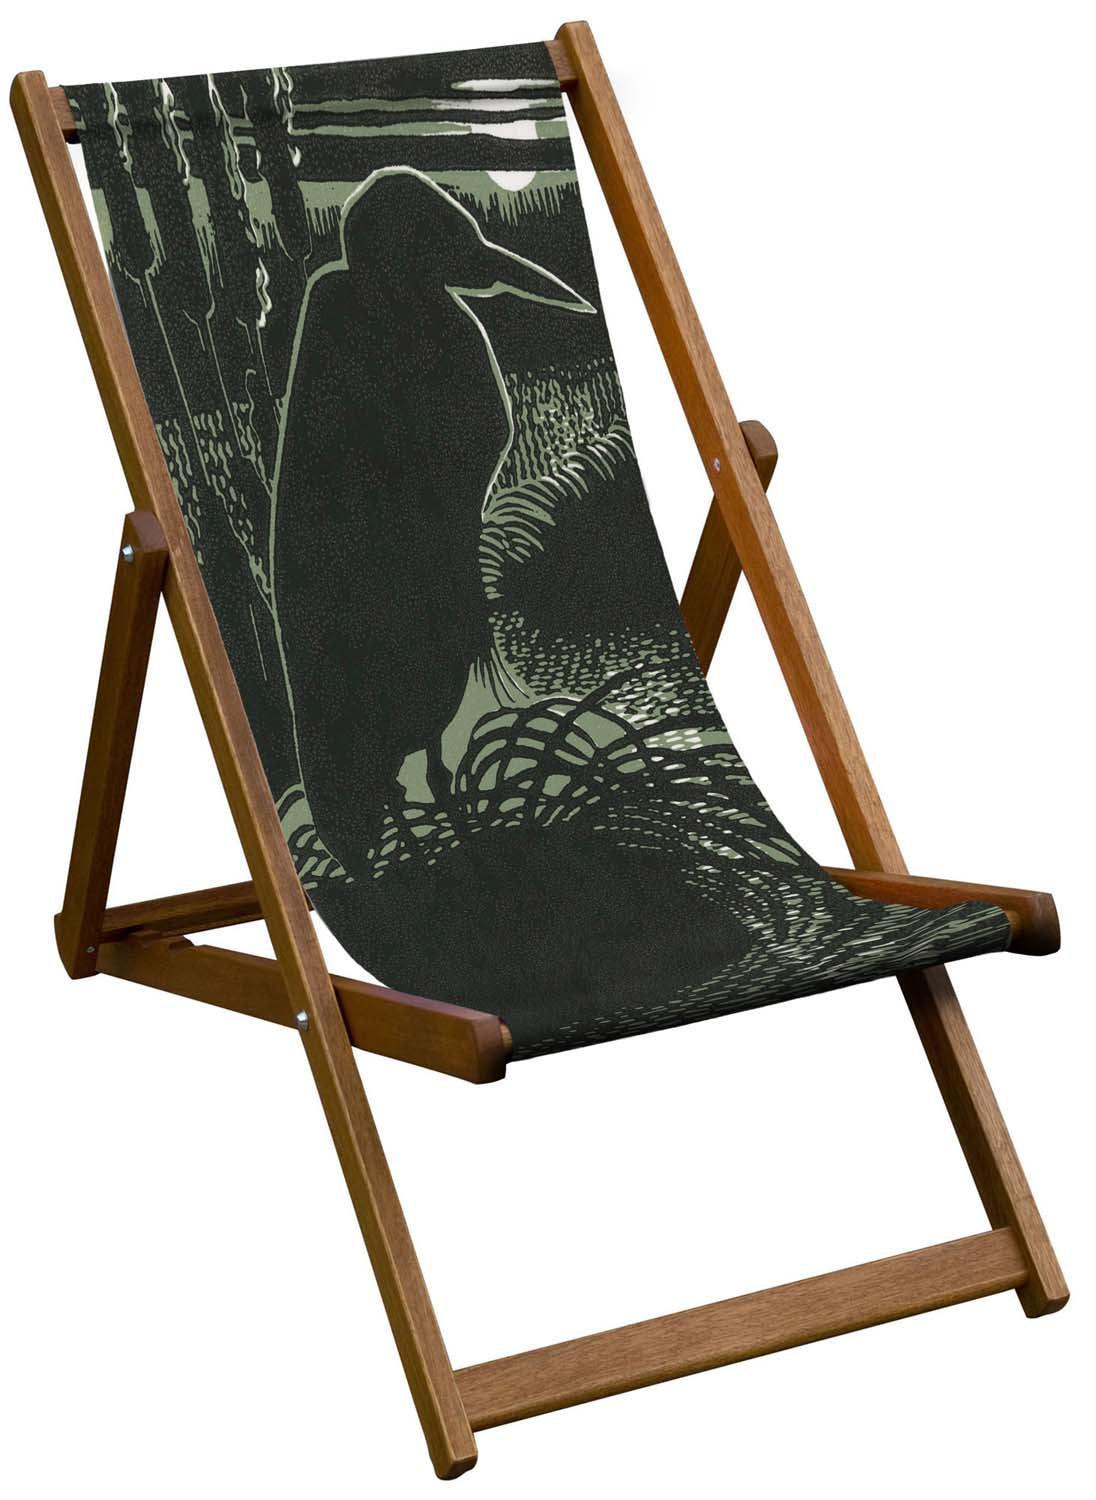 Heron, Moonrise - Robert Gillmor Deckchair